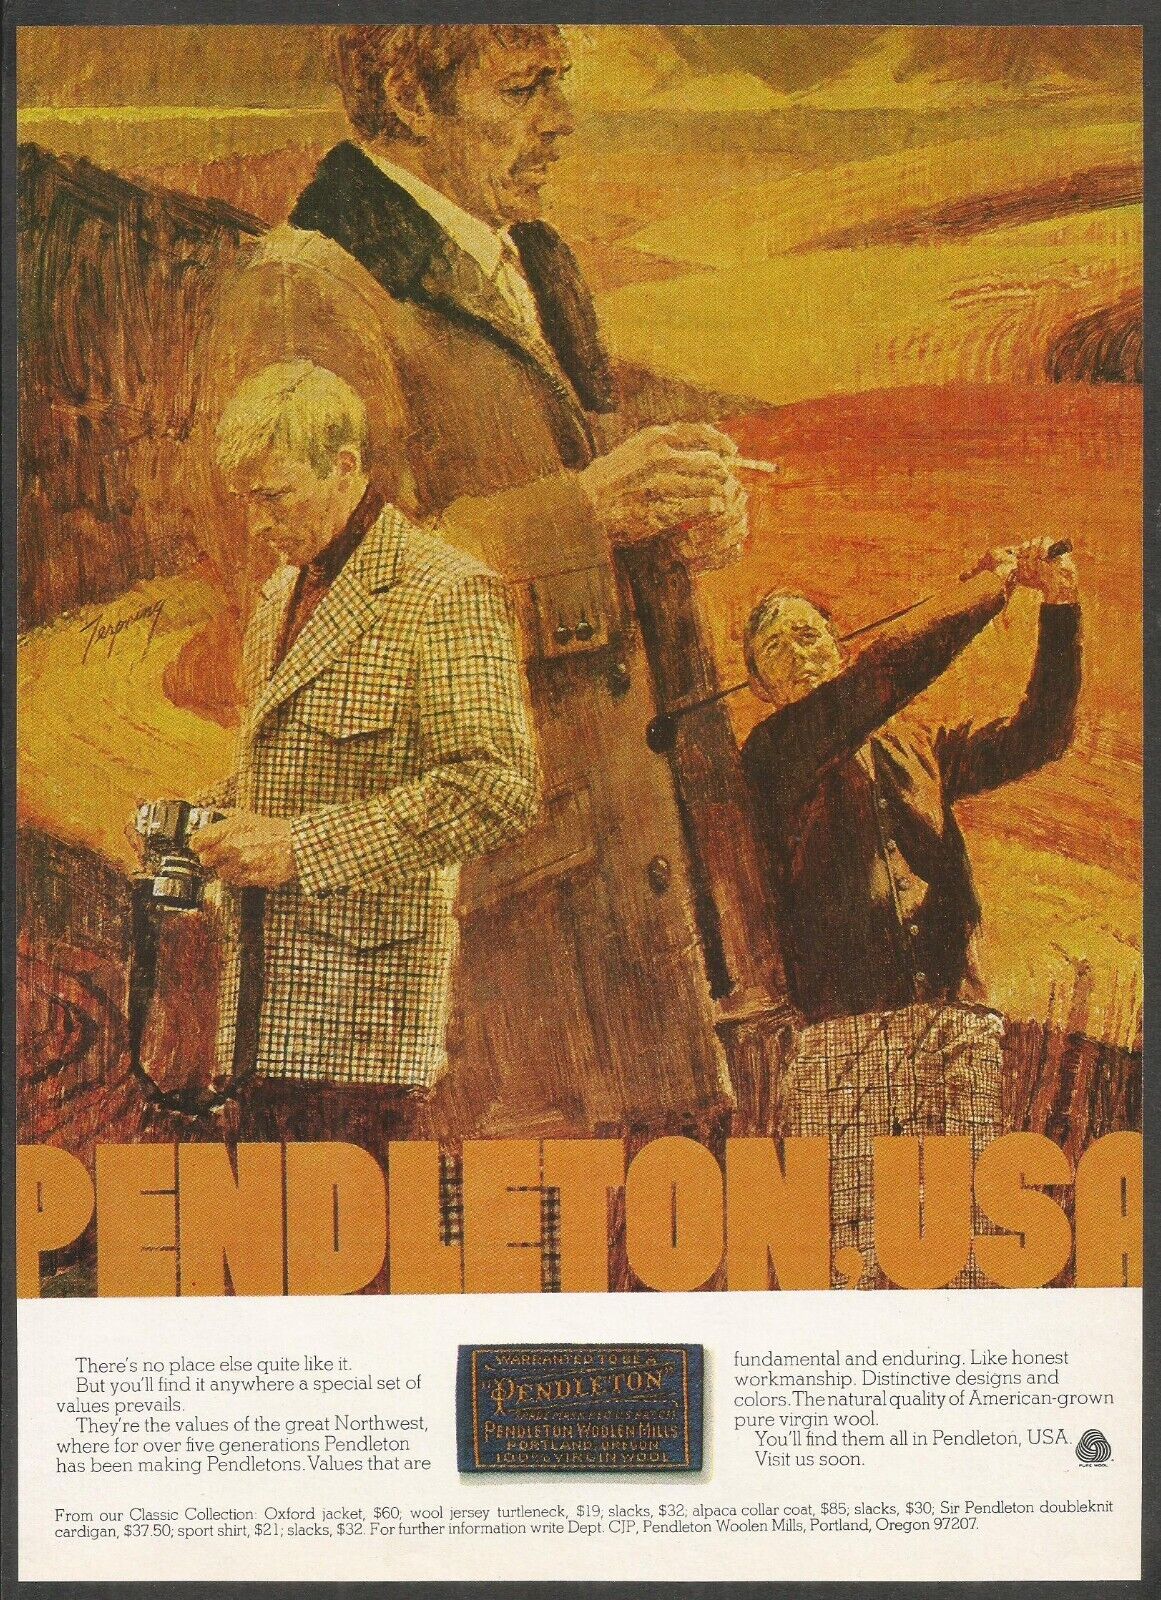 PENDLETON, USA - Pendleton Woolen Mills - 1973 Vintage Print Ad